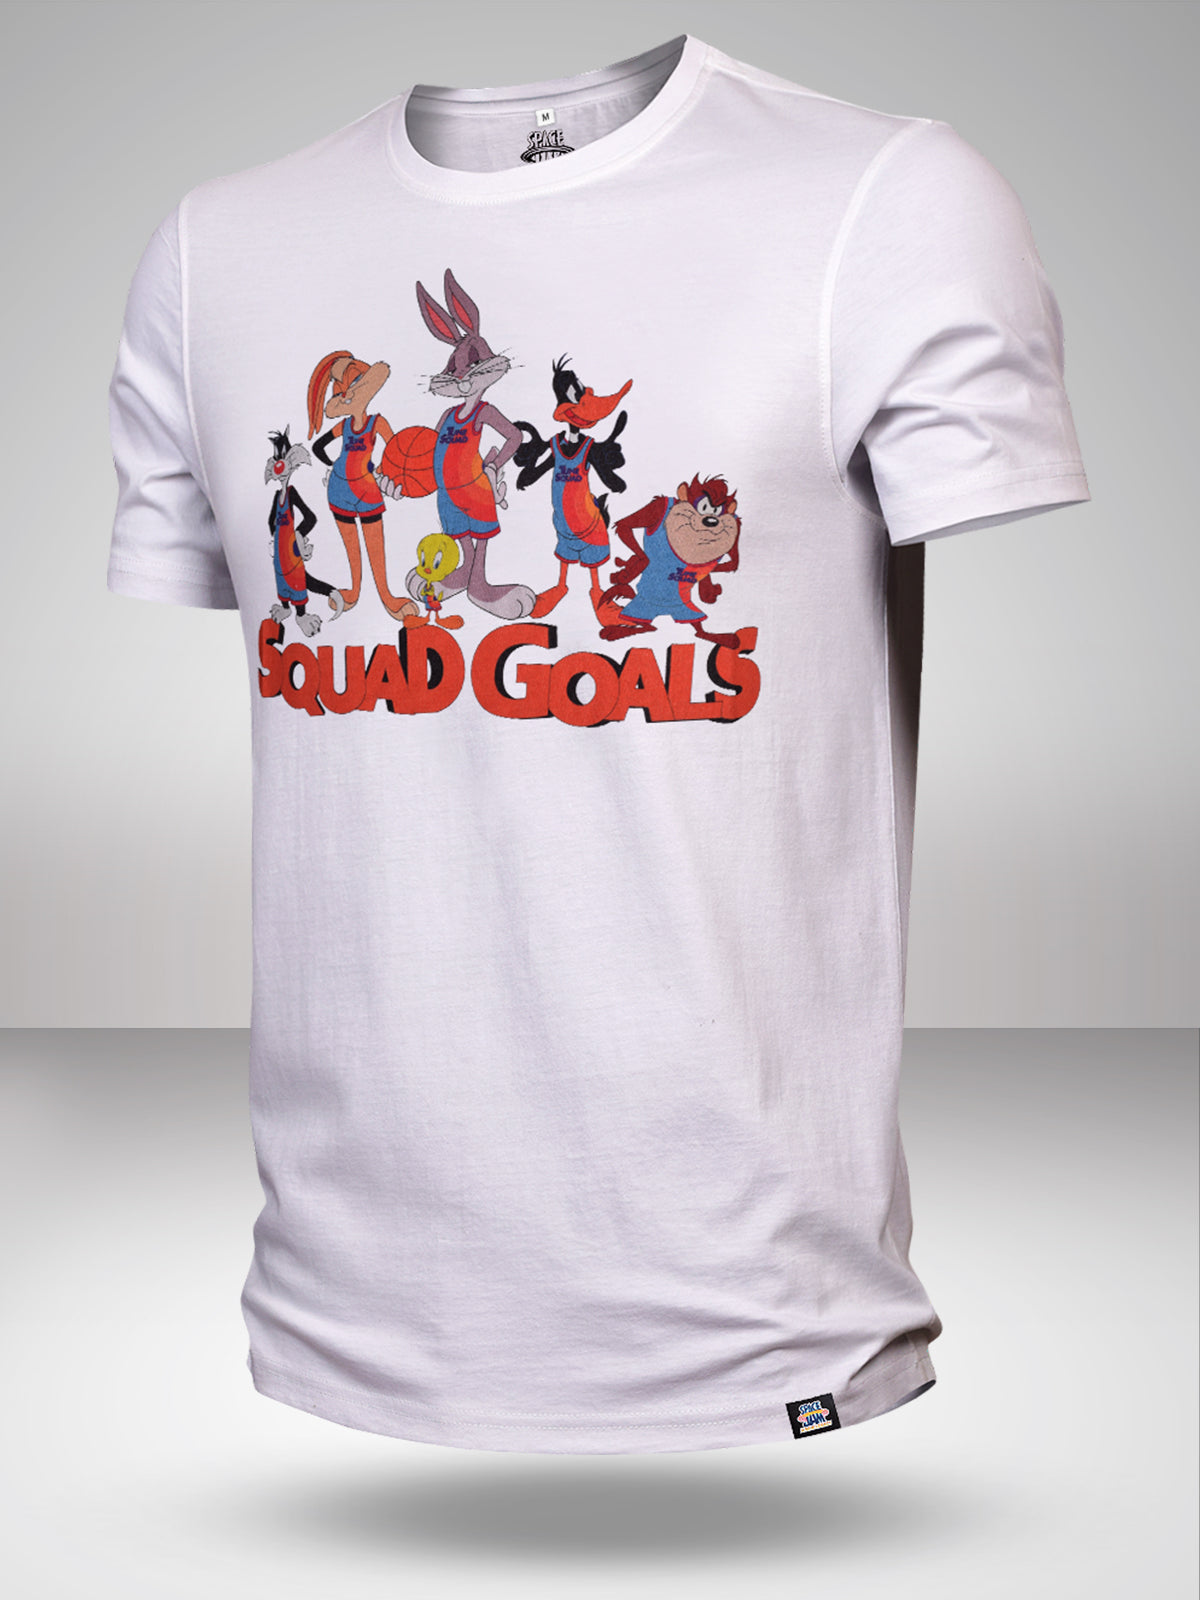 Bad Bunny Dodgers Shirt LA Baseball Jersey Tee - Best Seller Shirts Design  In Usa